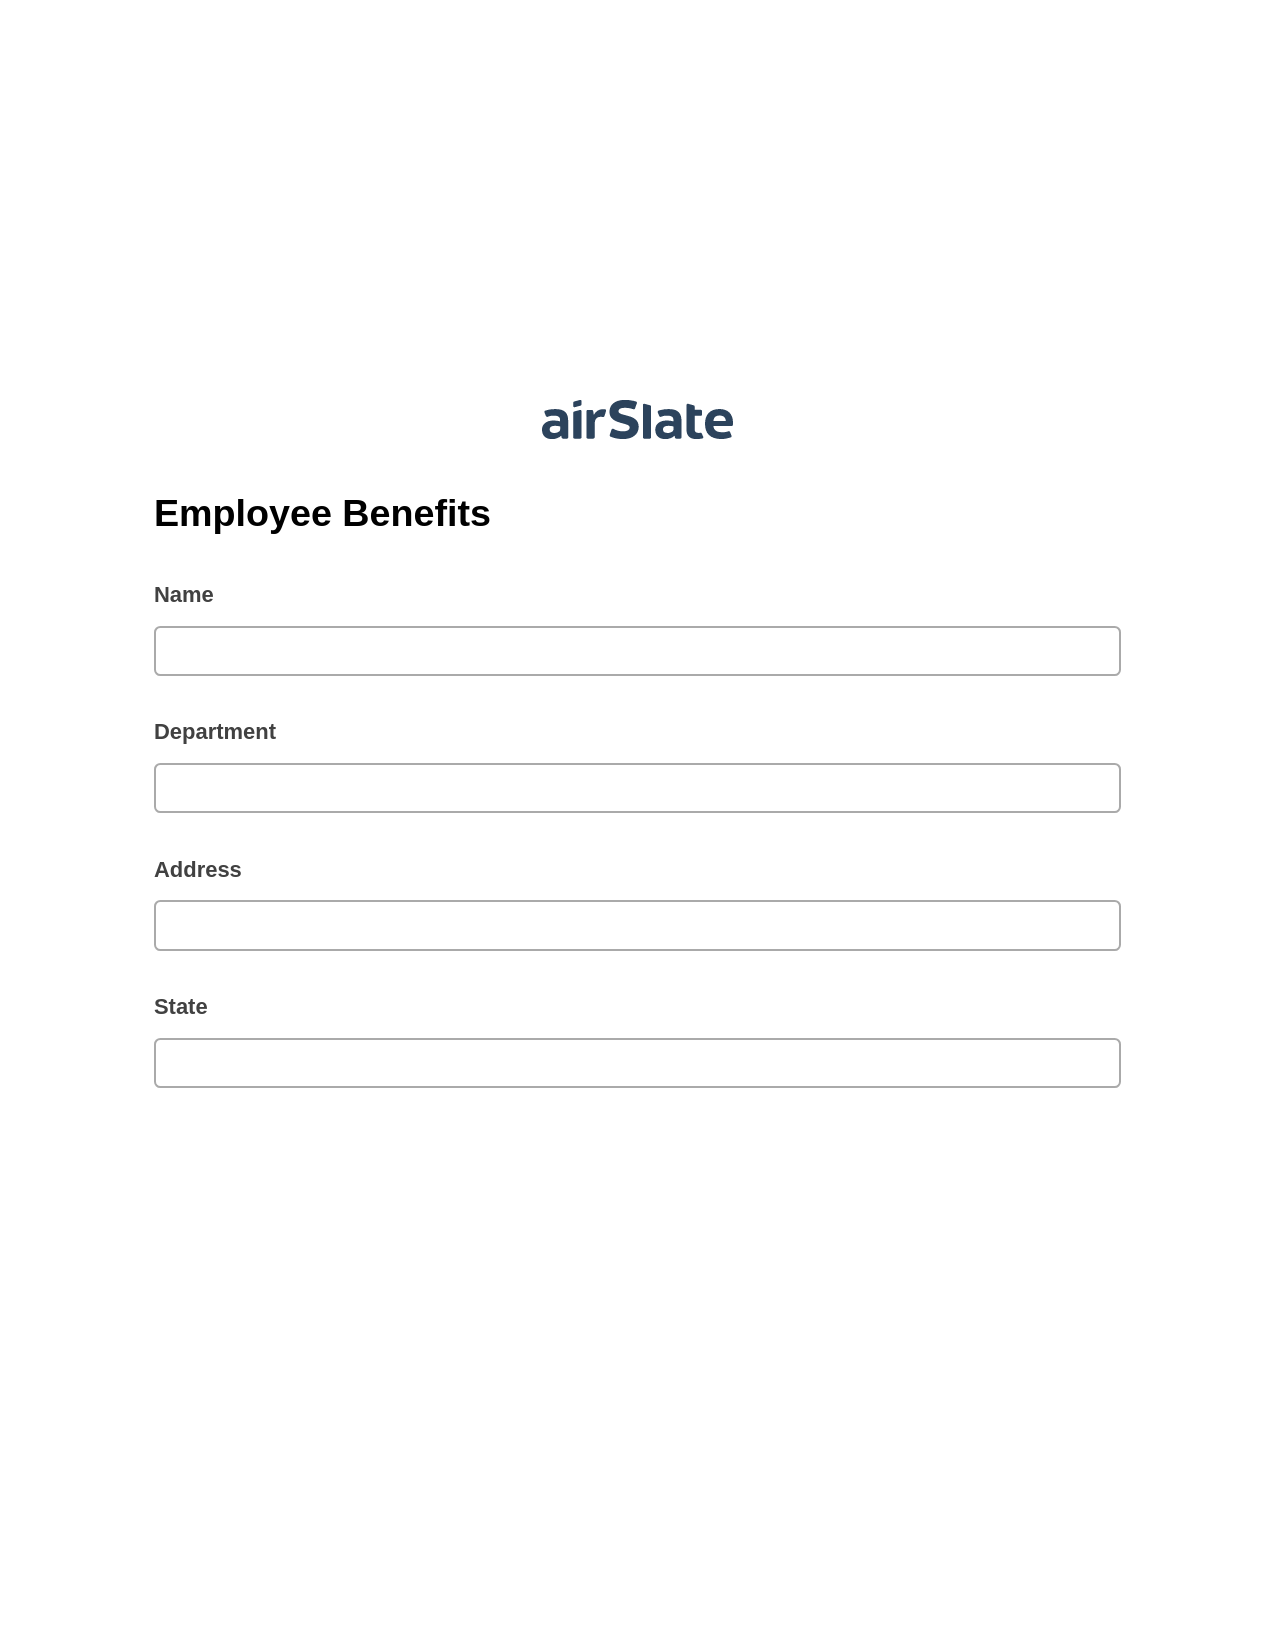 Employee Benefits Pre-fill Document Bot, Set Signature Type Bot, Export to Smartsheet